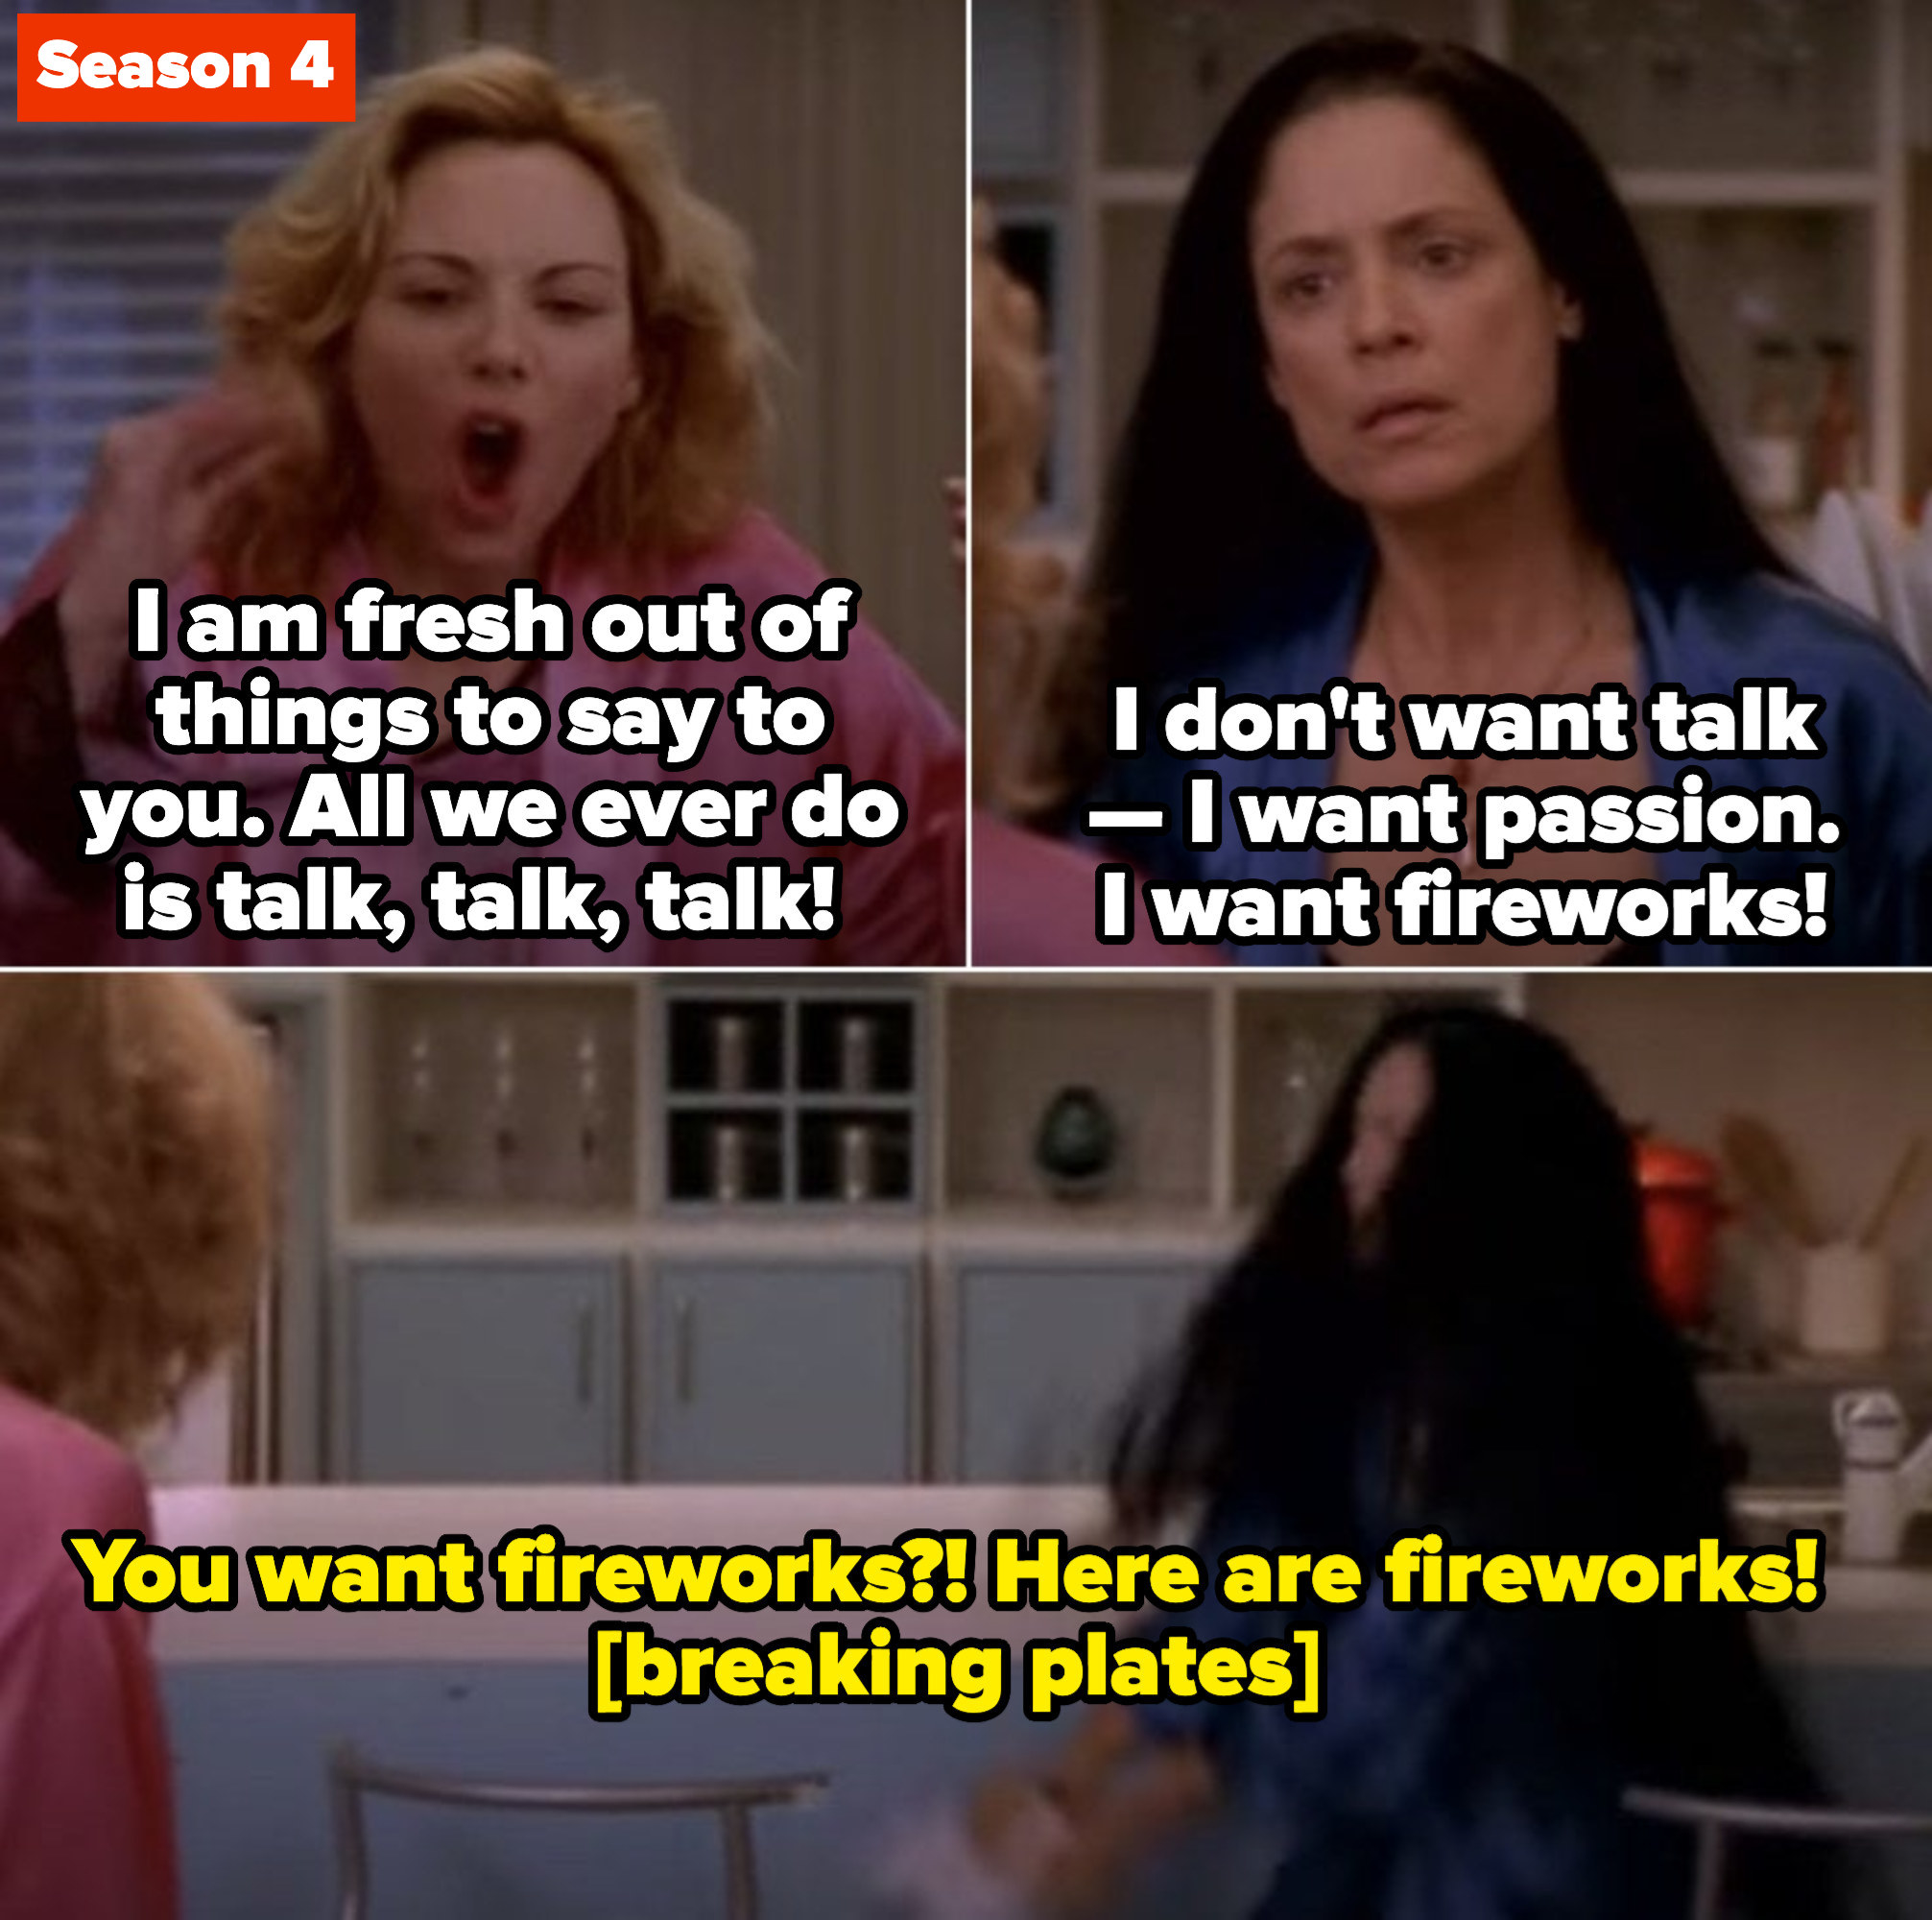 Samantha: &quot;I don&#x27;t want talk -- I want passion. I want fireworks!&quot; Maria: You want fireworks?! Here are fireworks!&quot; Maria breaks Samantha&#x27;s plates